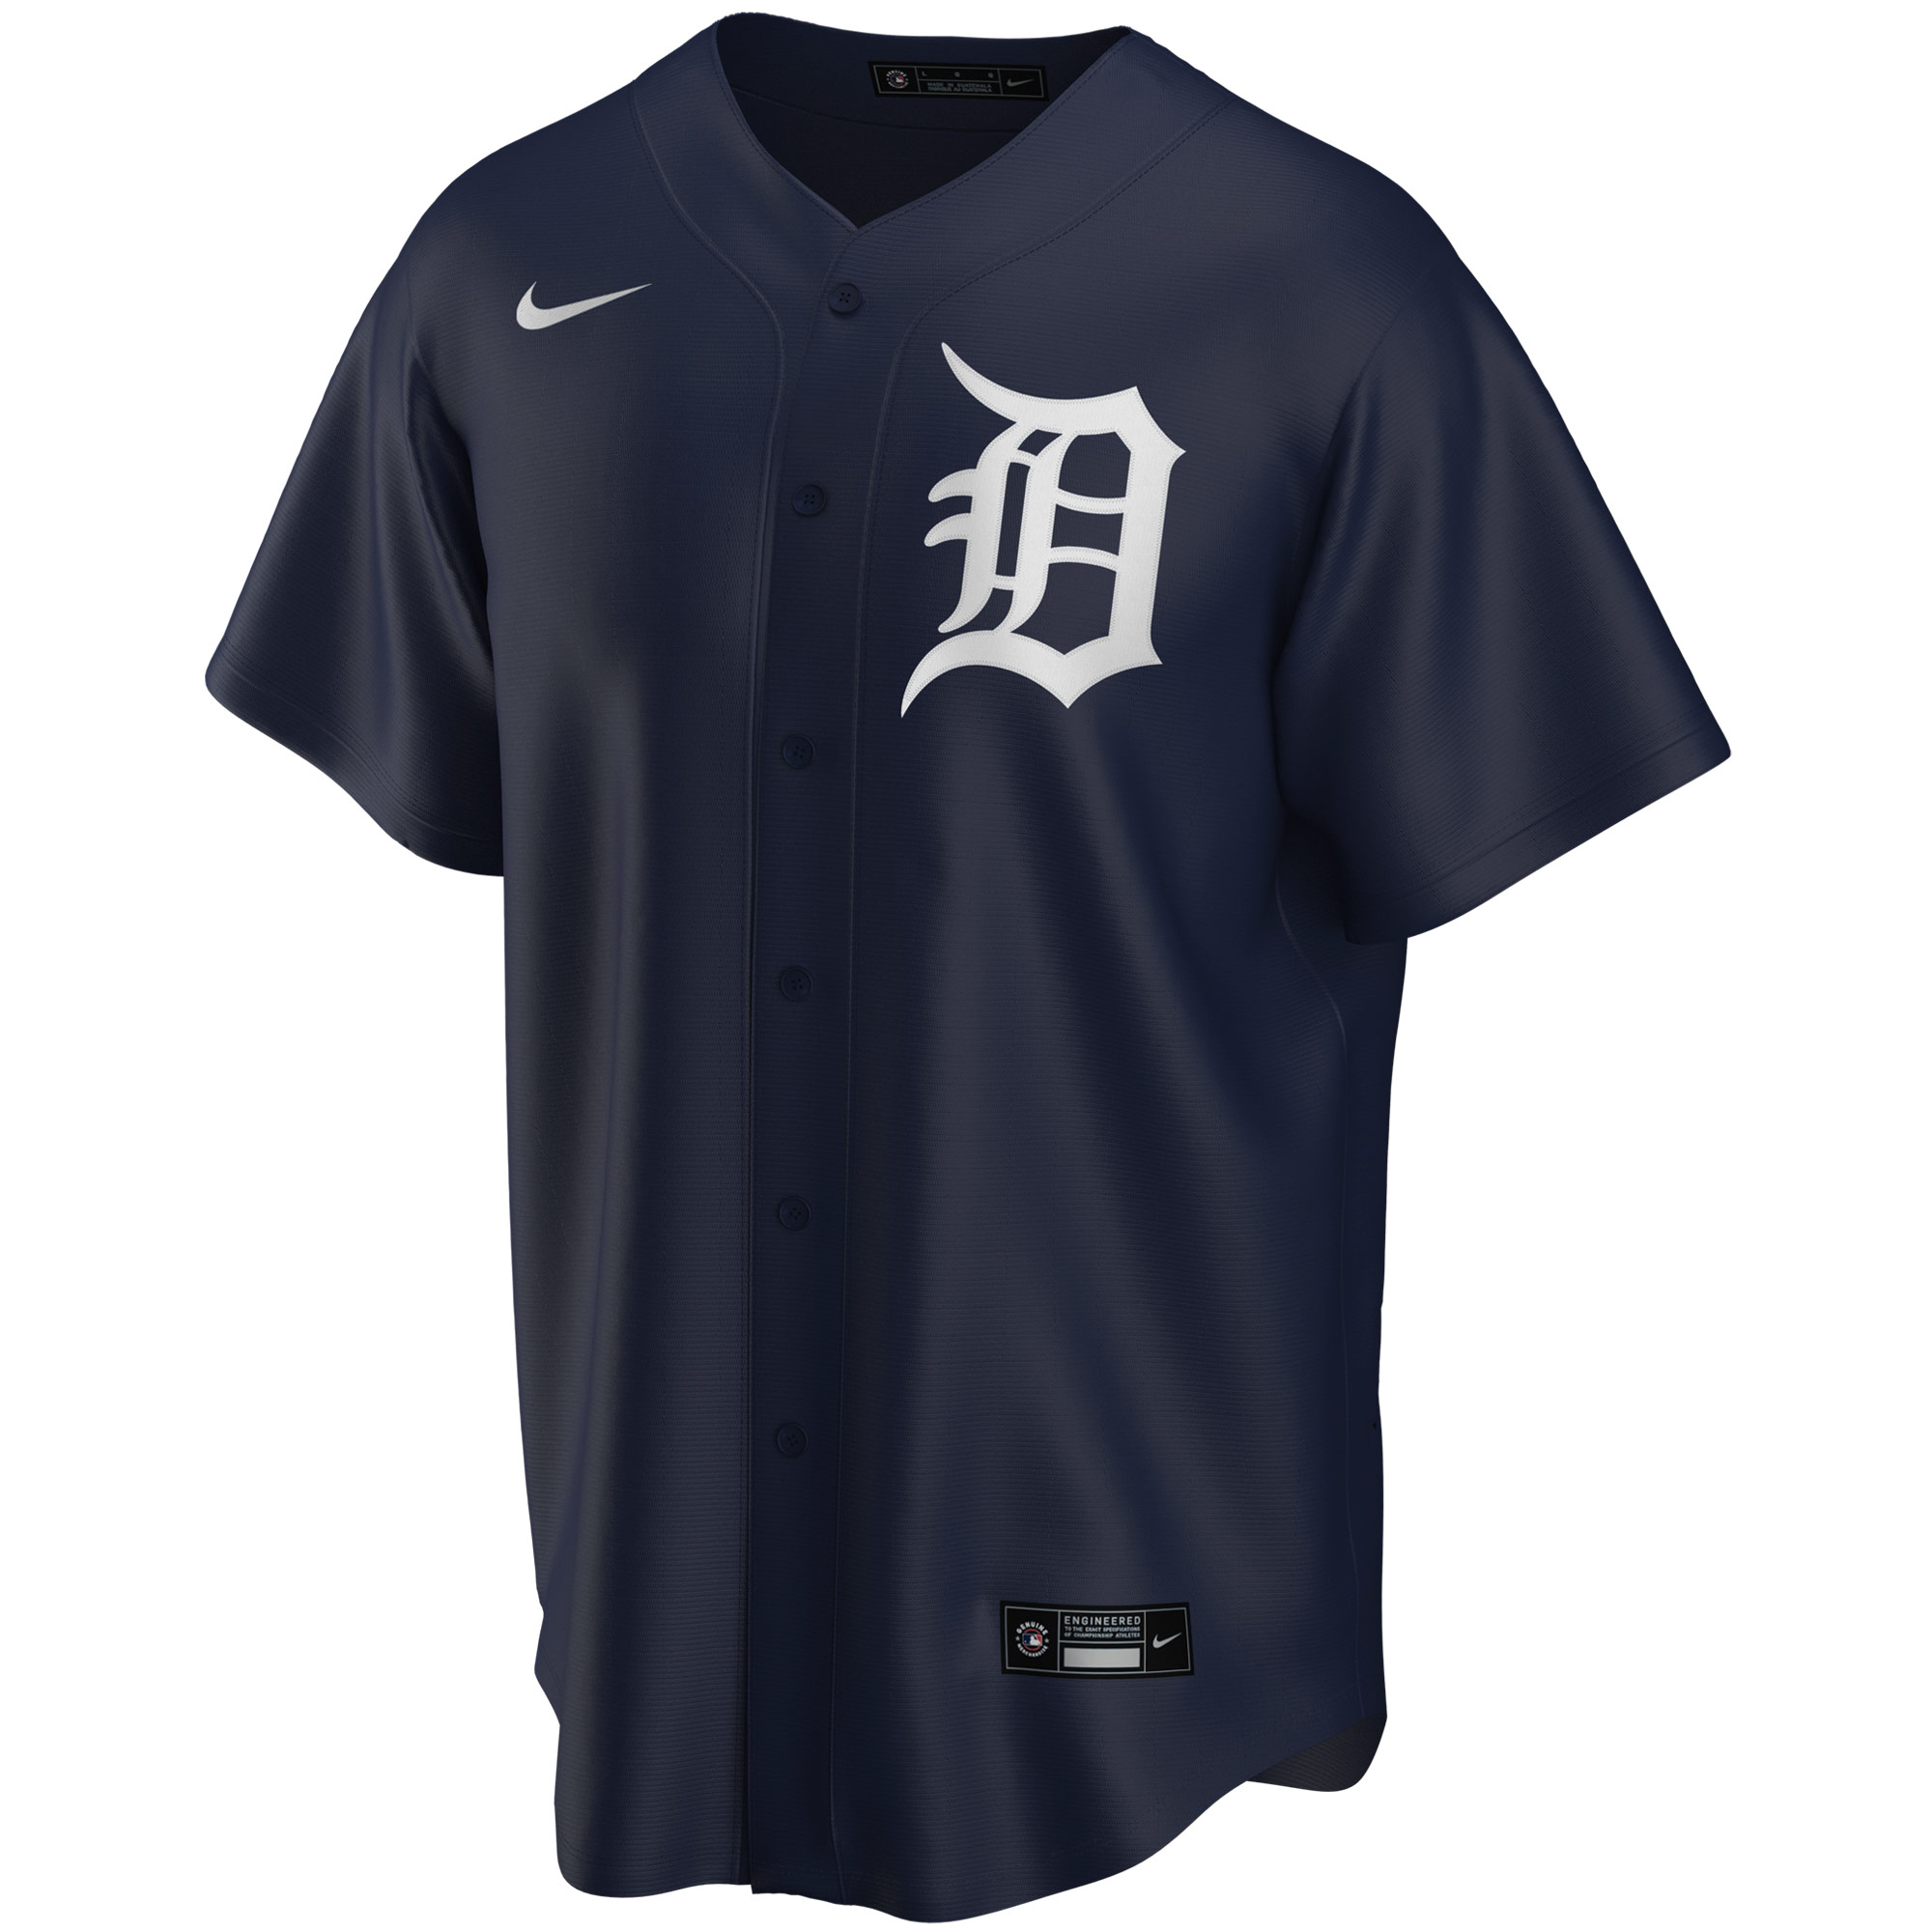 Detroit Tigers Jerseys, Tigers Jersey, Detroit Tigers Uniforms